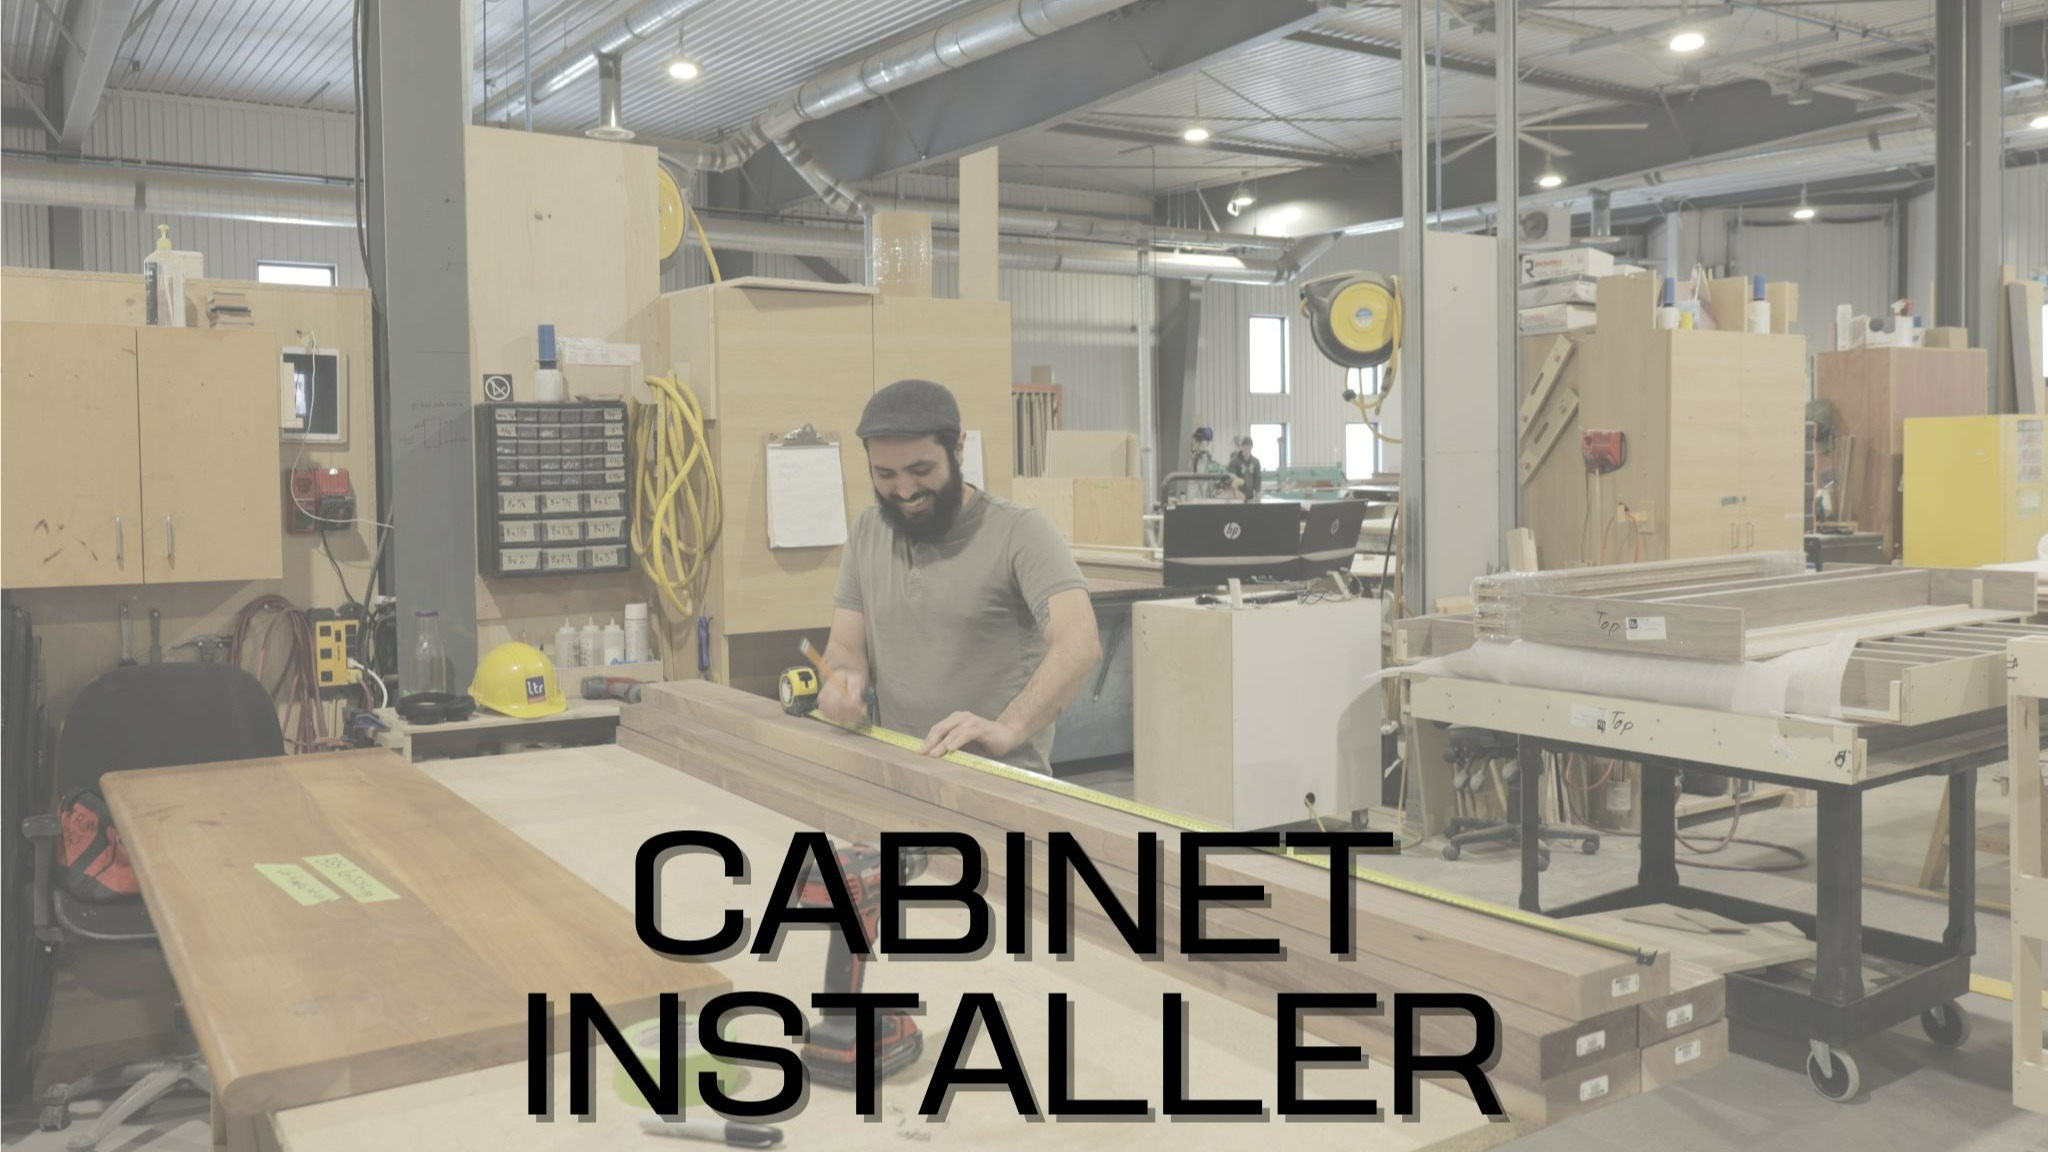 Cabinet Installer - Entry